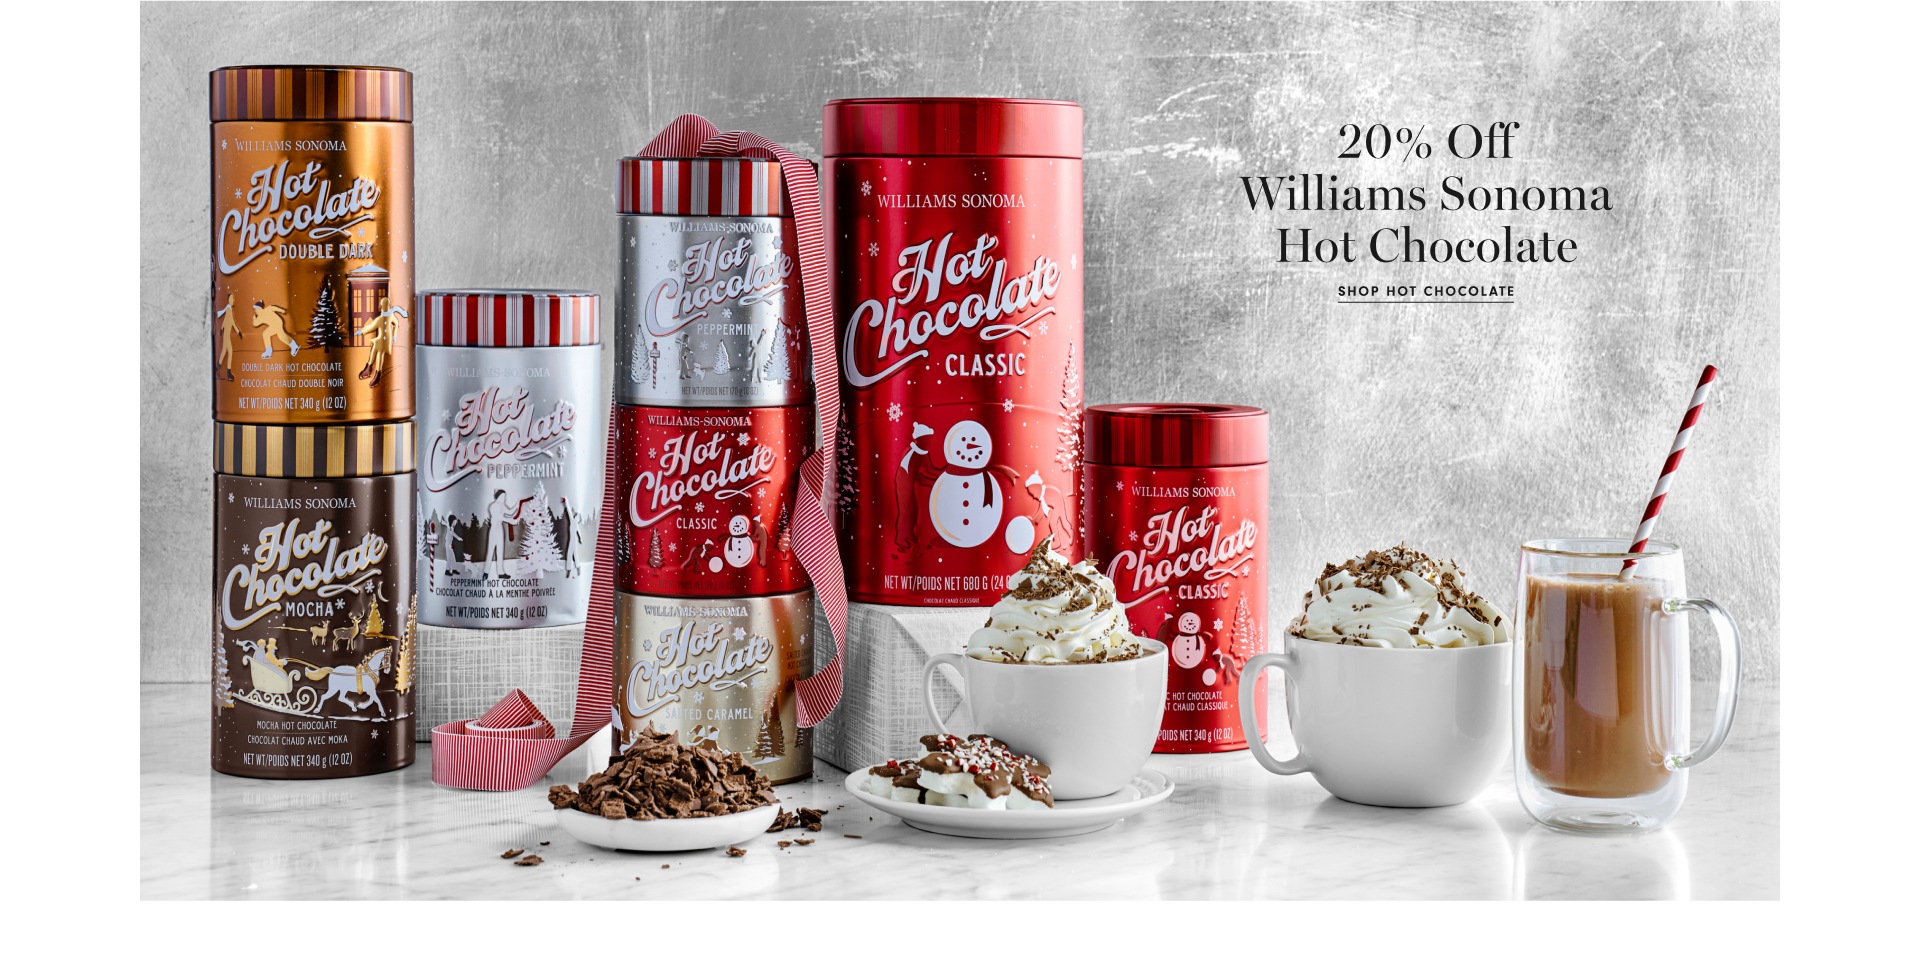 20% Off Williams Sonoma Hot Chocolate*